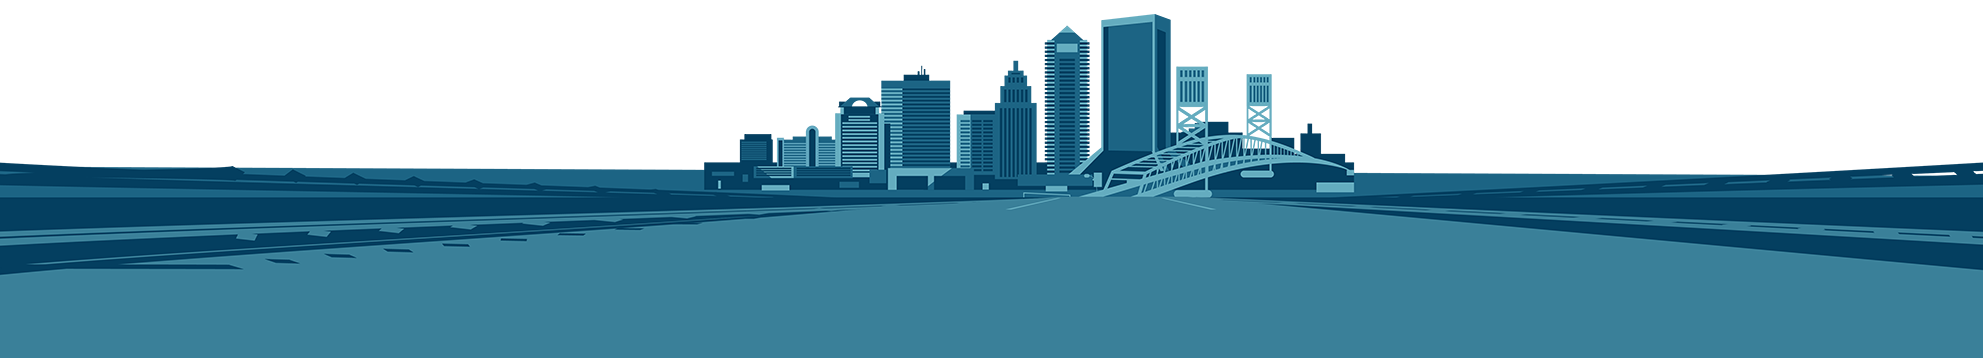 cityscape illustration